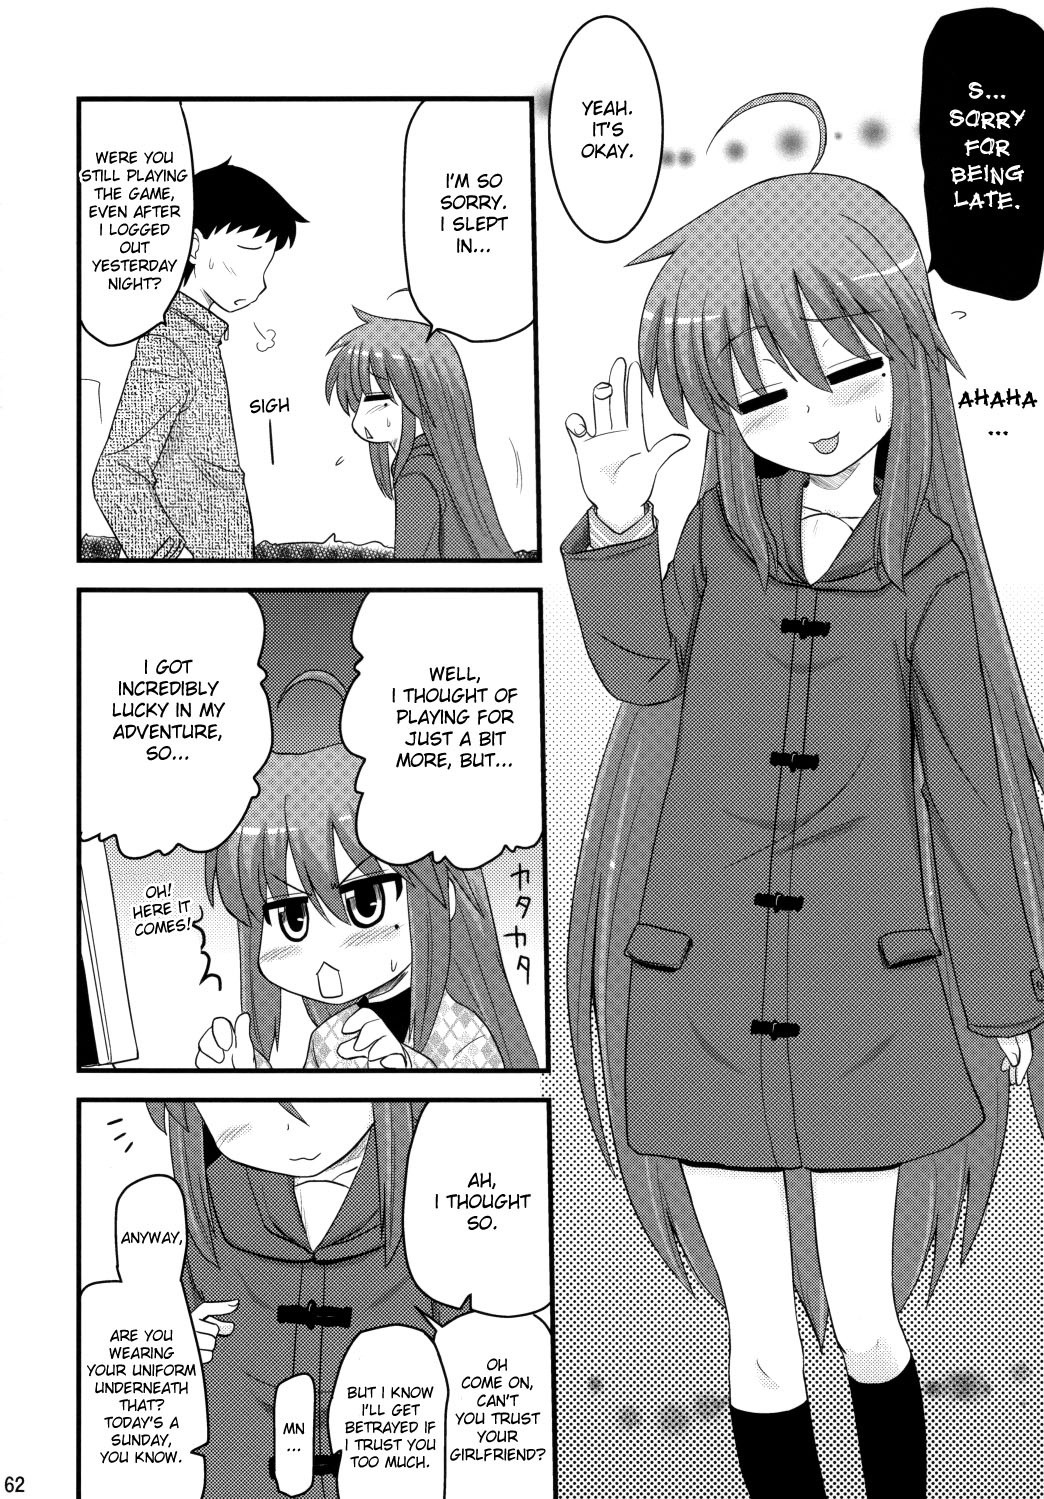 Konata and Oh-zu 4 people each and every one + 1 hentai manga picture 58